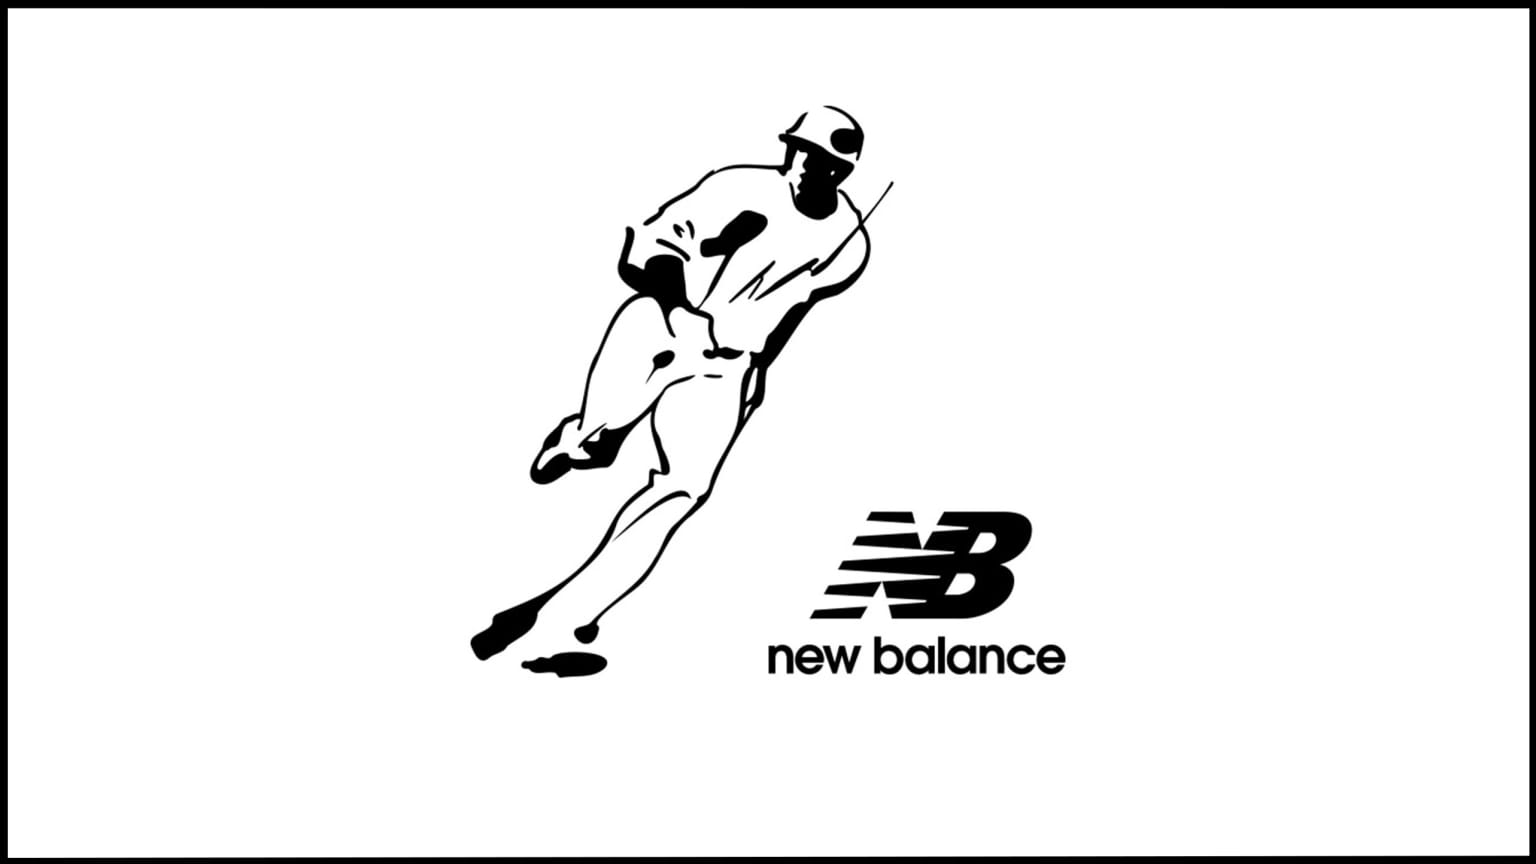 Shohei Ohtani's New Balance logo